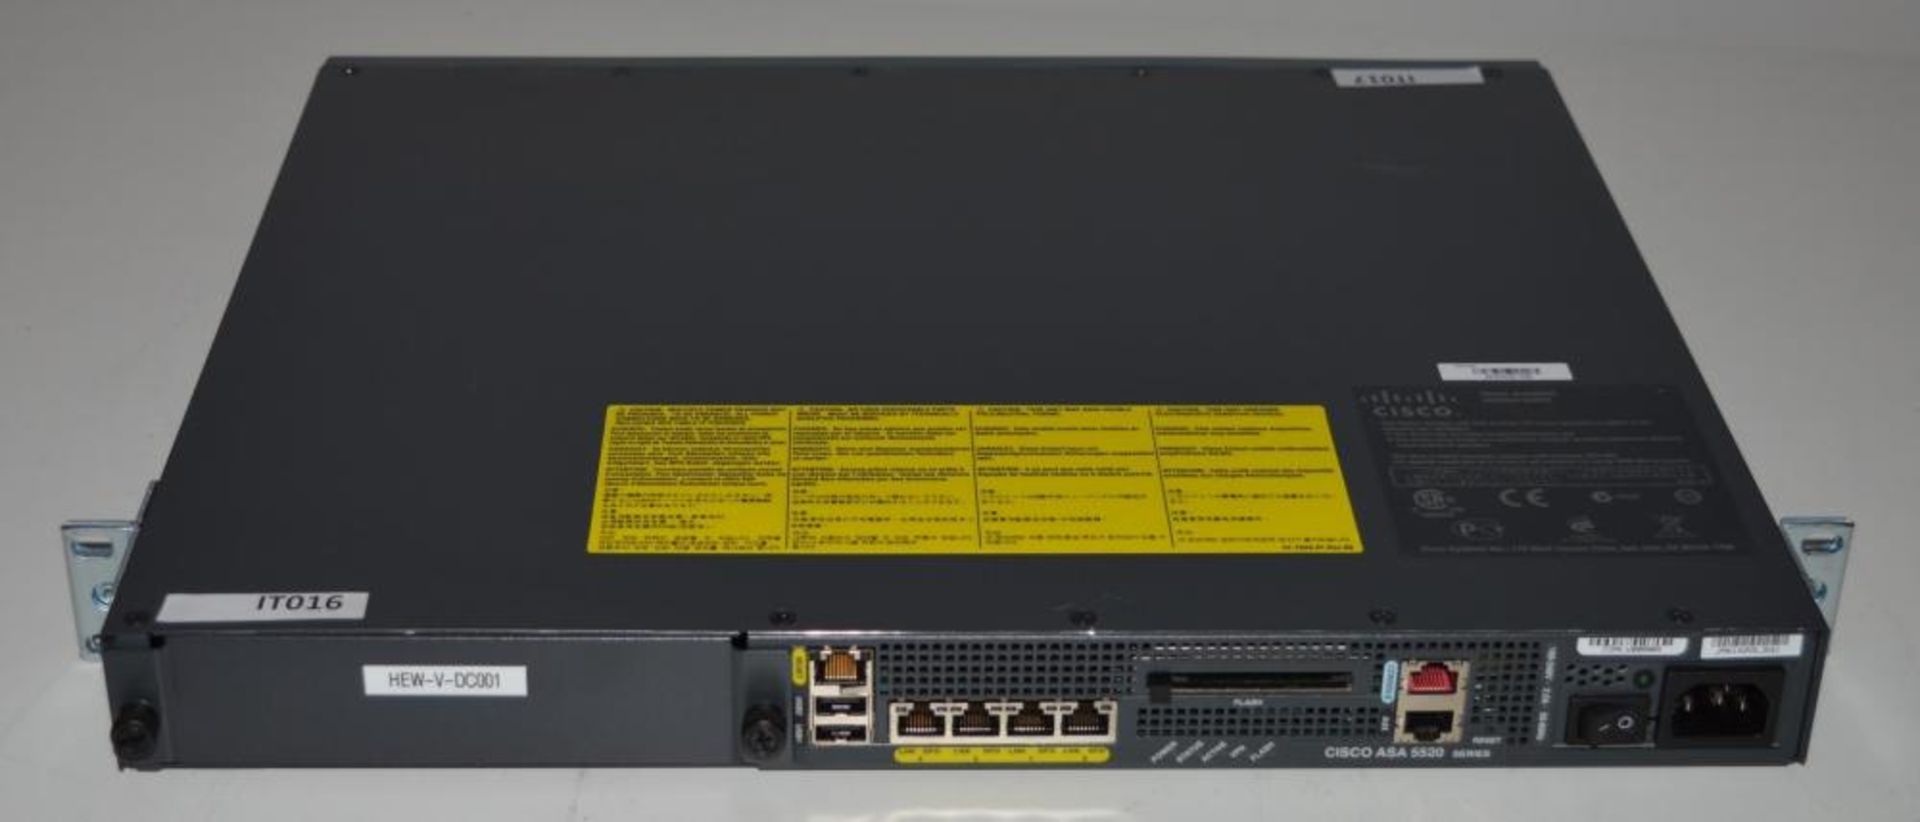 1 x Cisco ASA 5520 Adaptive Security Appliance - CL240 - Ref IT017 - Location: Altrincham WA14<B - Image 4 of 5